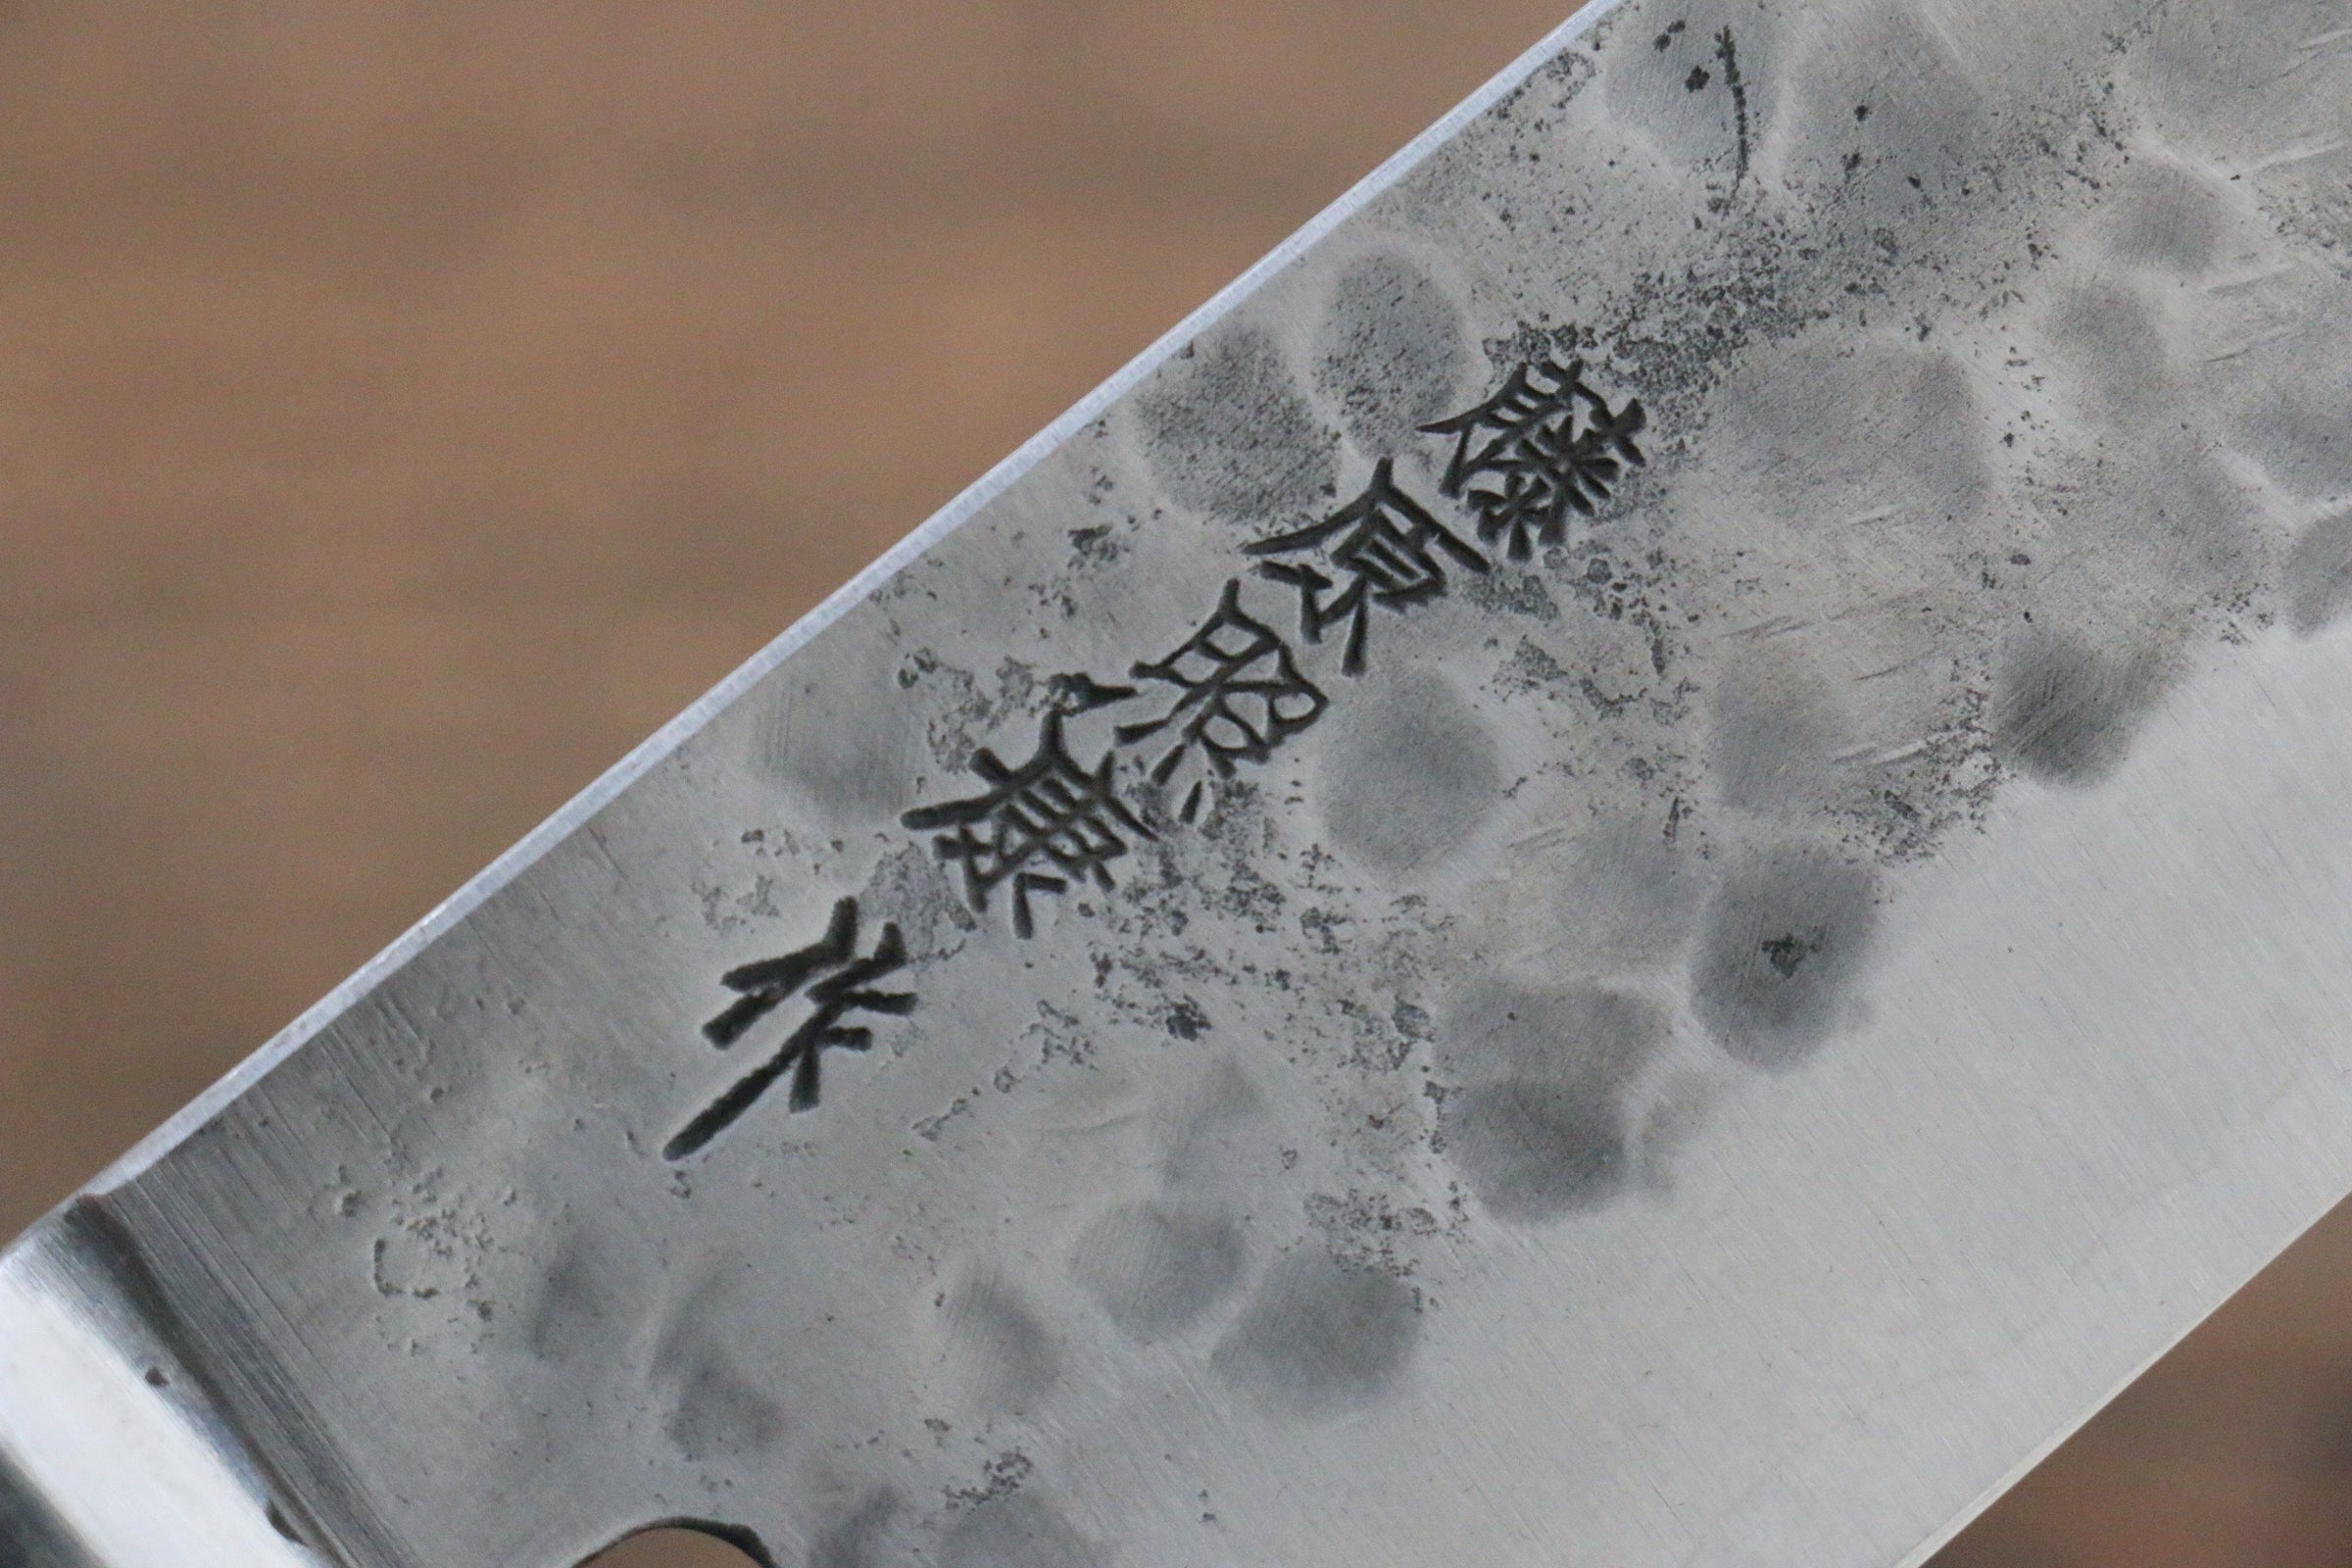 Santoku knife [Maboroshi] 180mm, Special offer